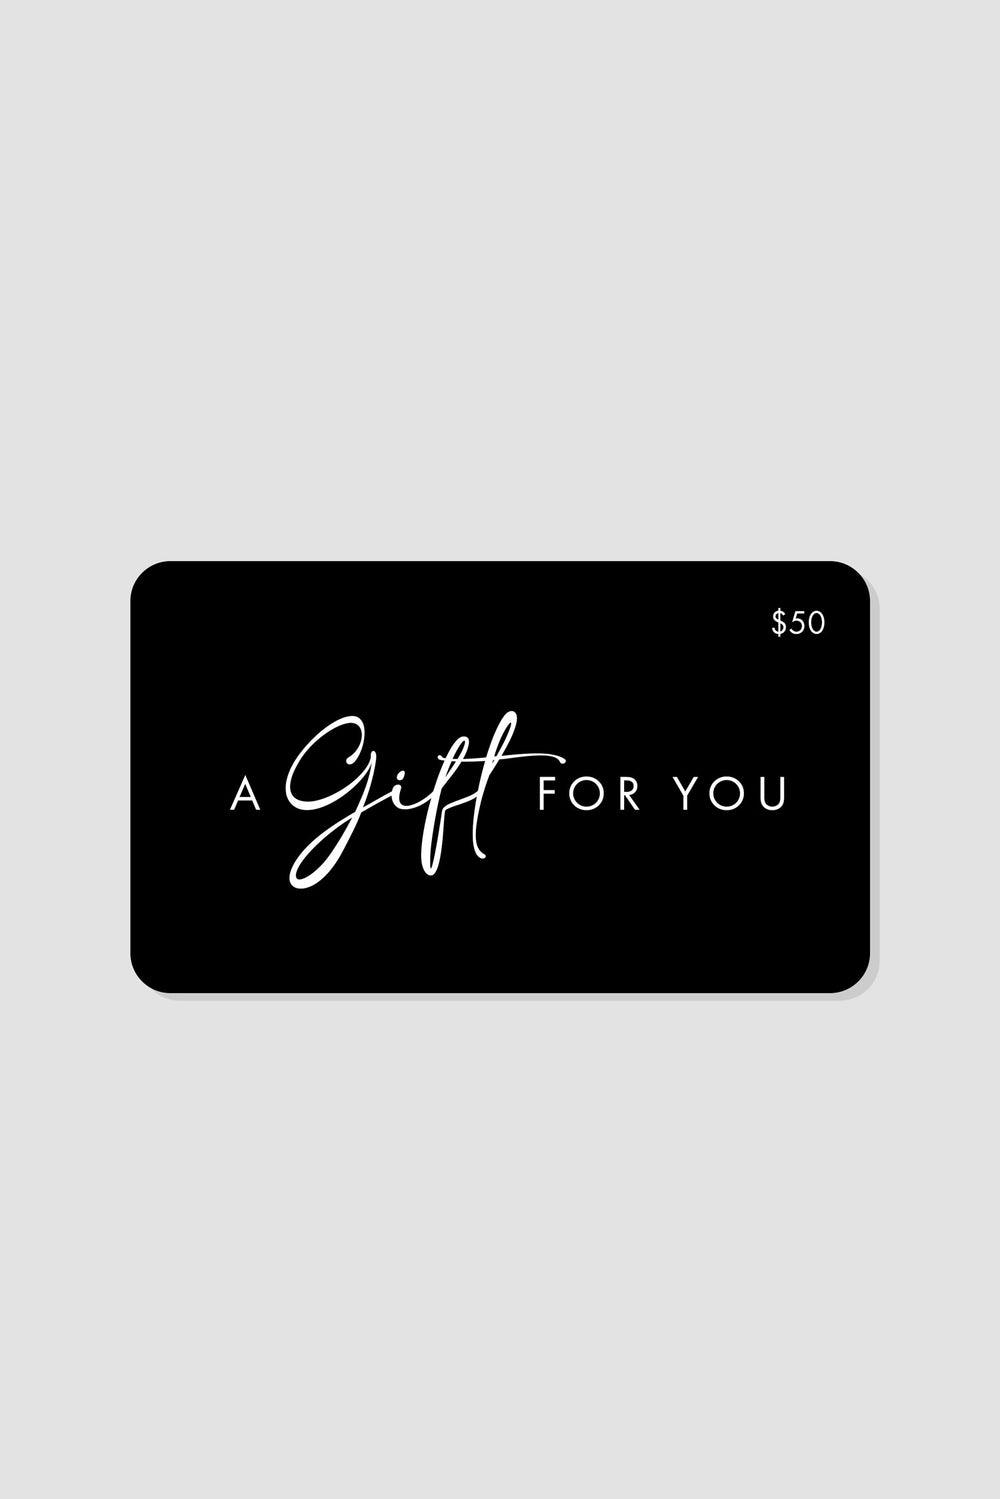 The E-Gift Card - $50.00 (1)